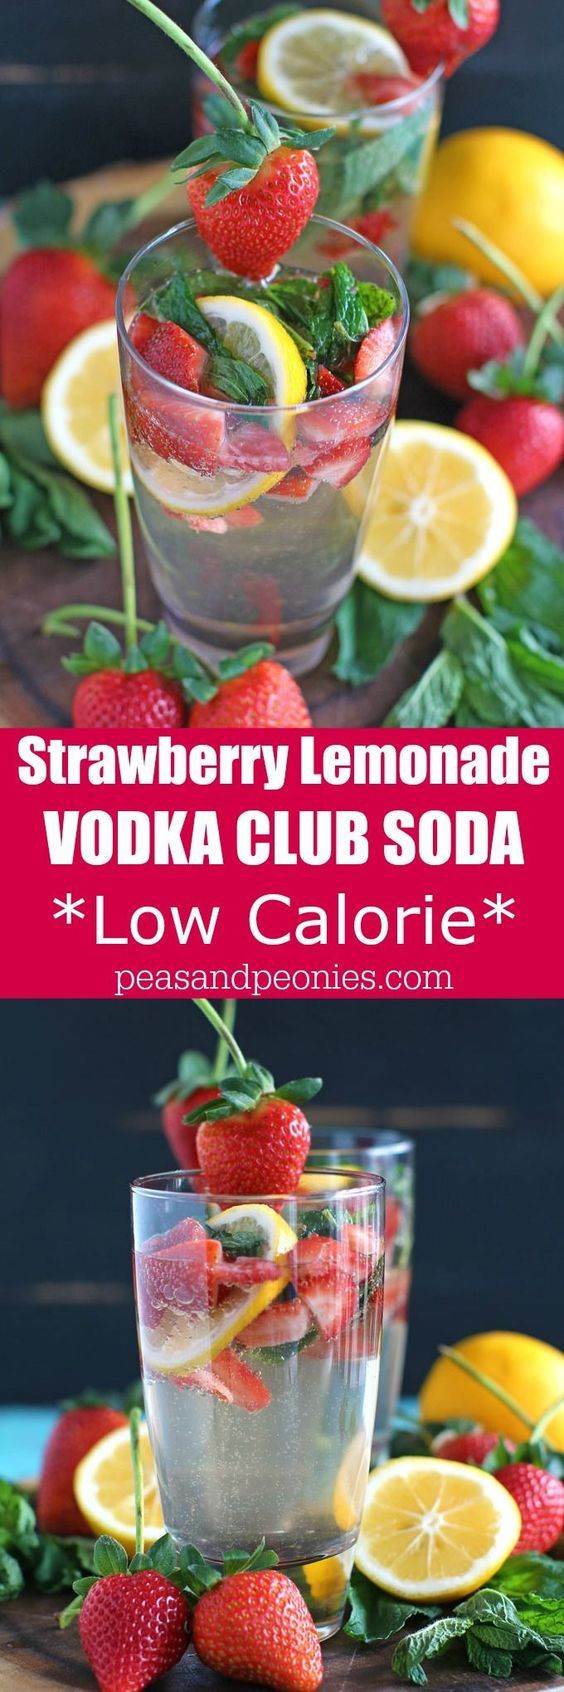 Low Calorie Vodka Drink Recipes
 Lemonade Vodka Club Soda Recipe